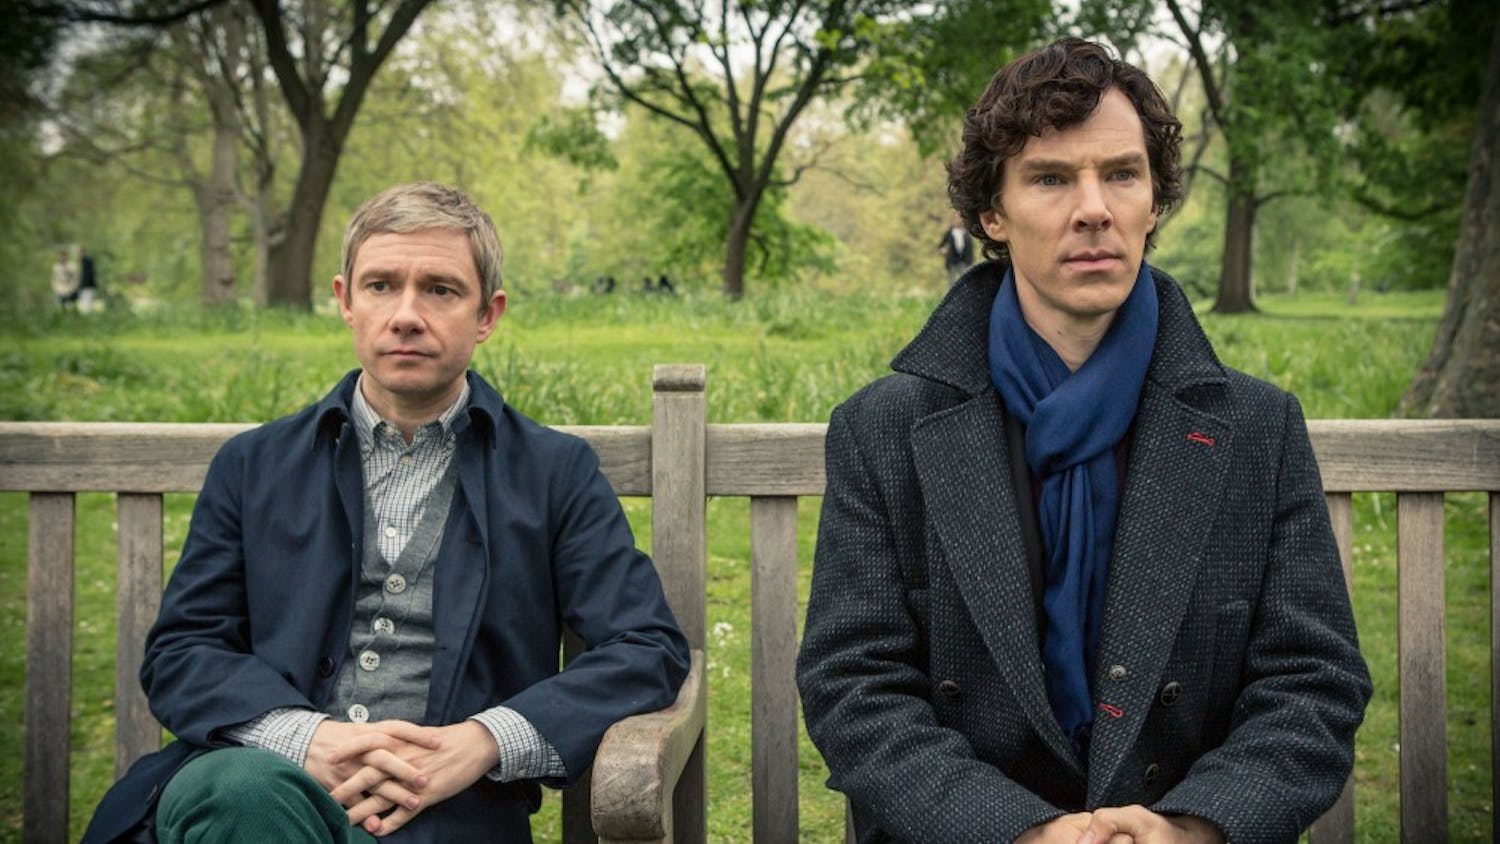 Martin Freeman stars as John Watson and Benedict Cumberbatch as Sherlock Holmes in "Sherlock" on PBS' Masterpiece. (Robert Viglasky/Hartswood Films/PBS/MCT)